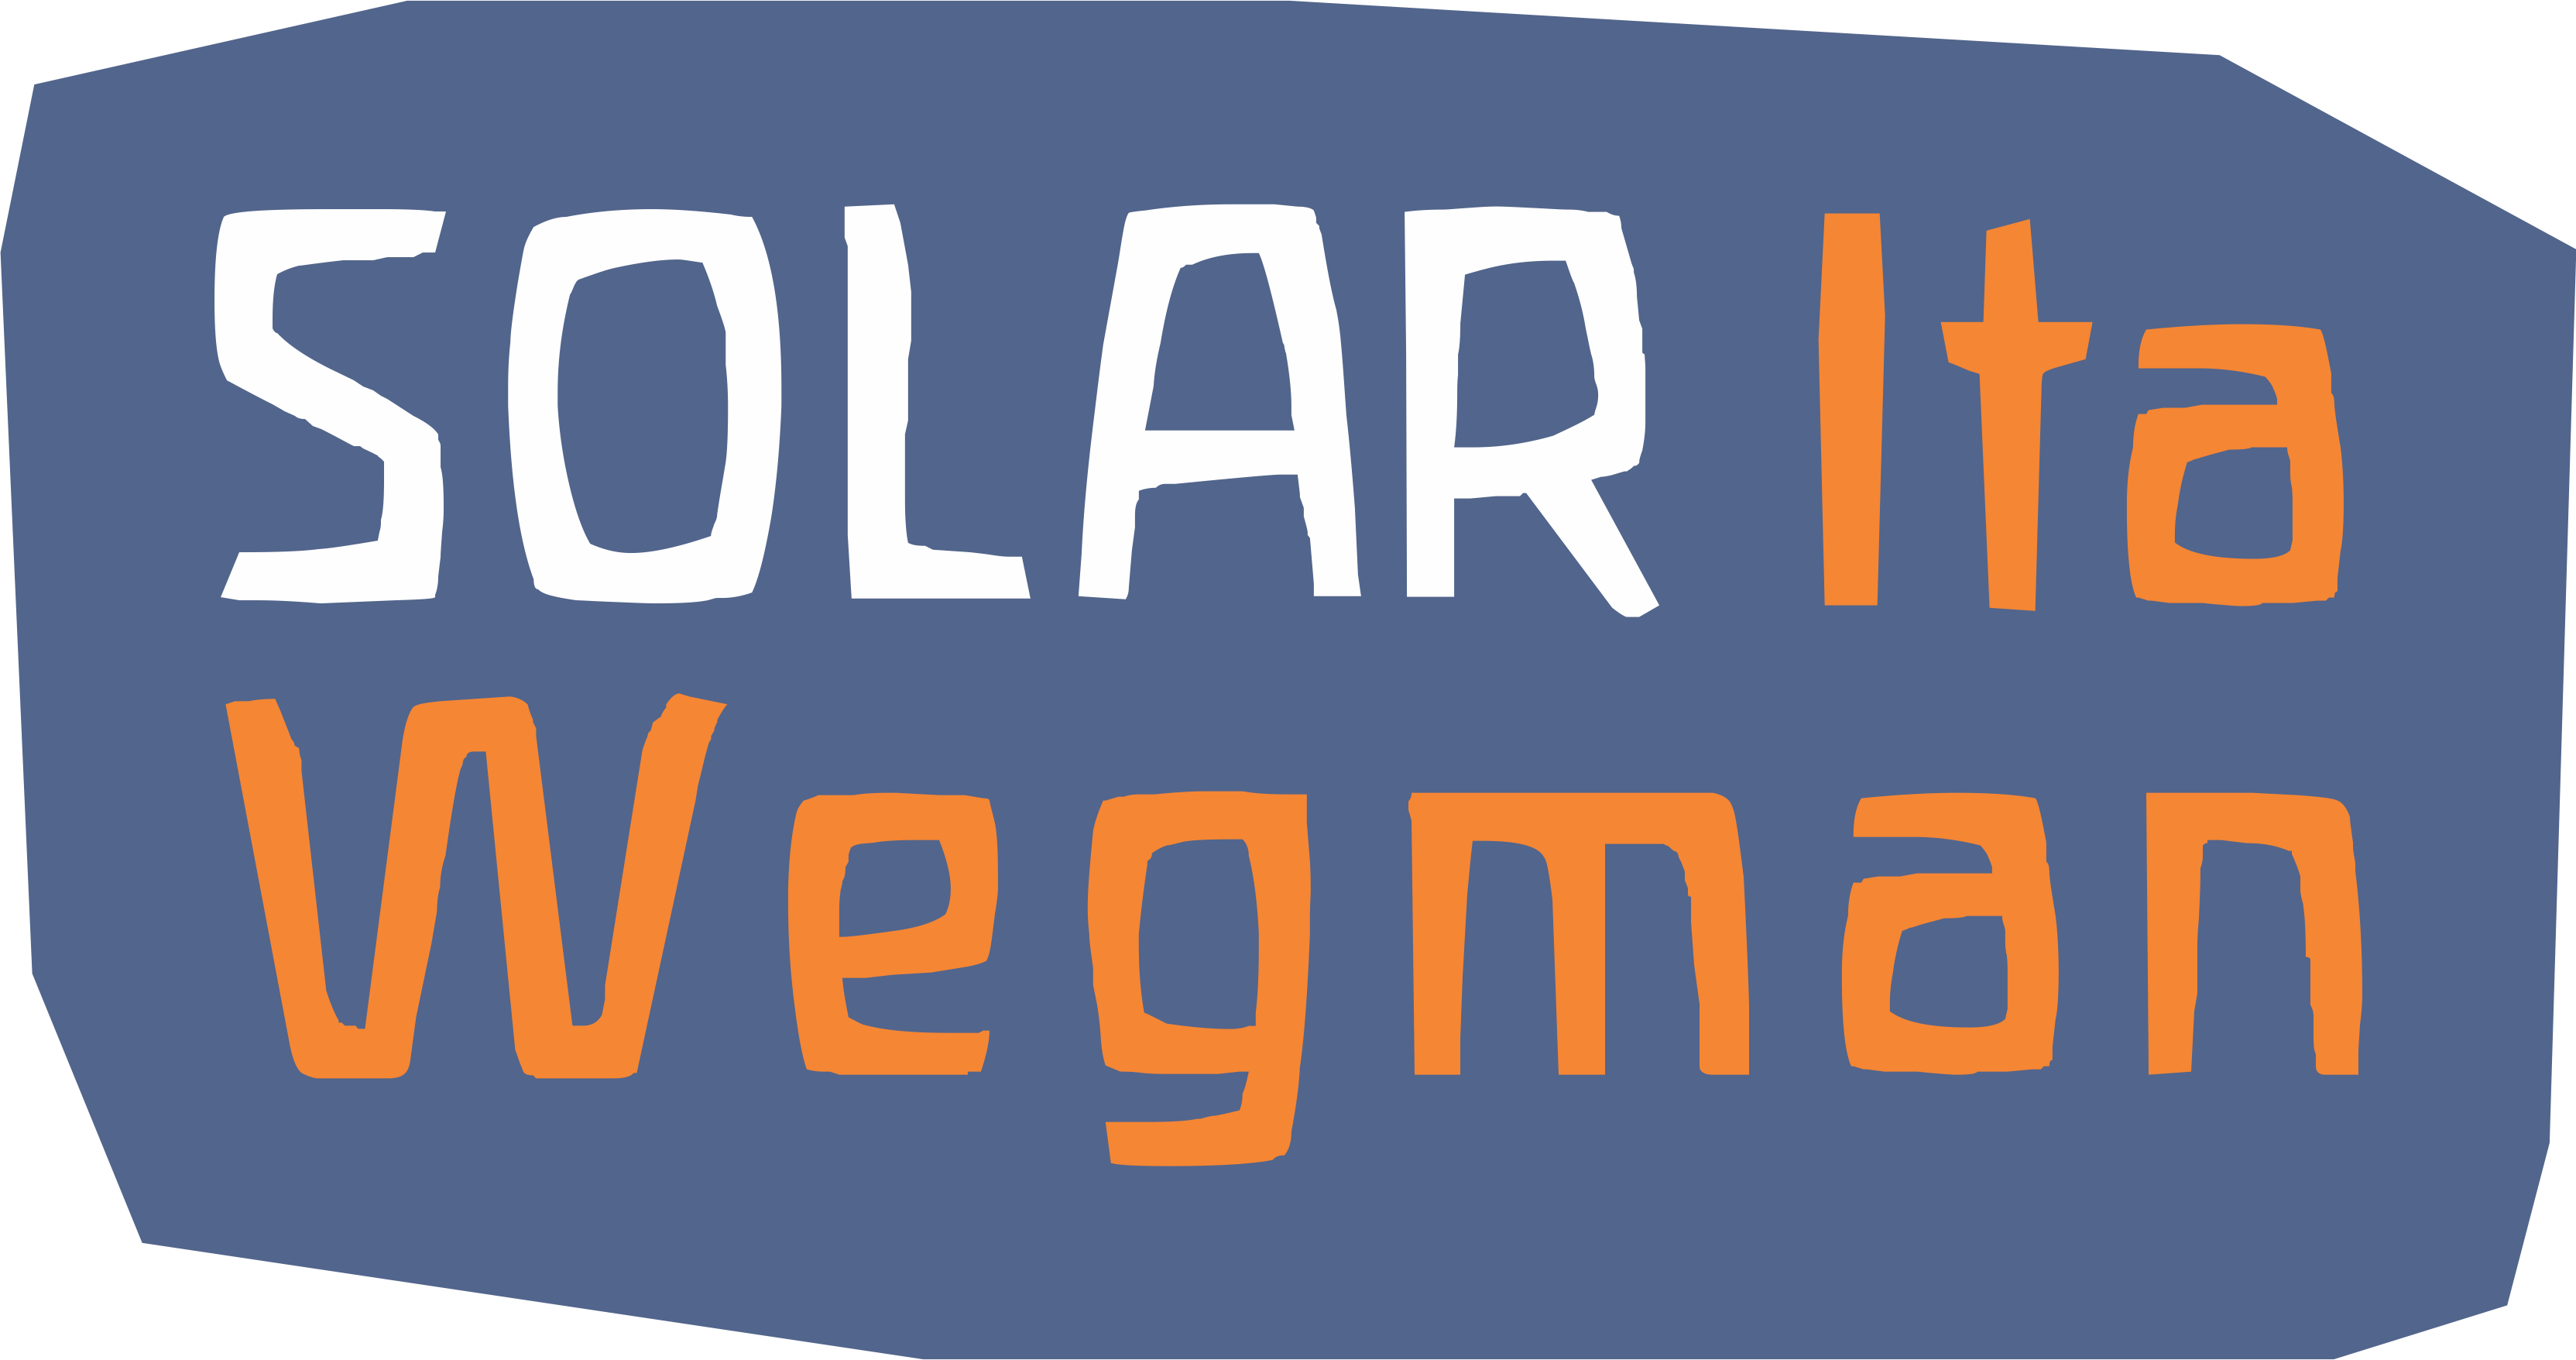 Associação Solar Ita Wegman